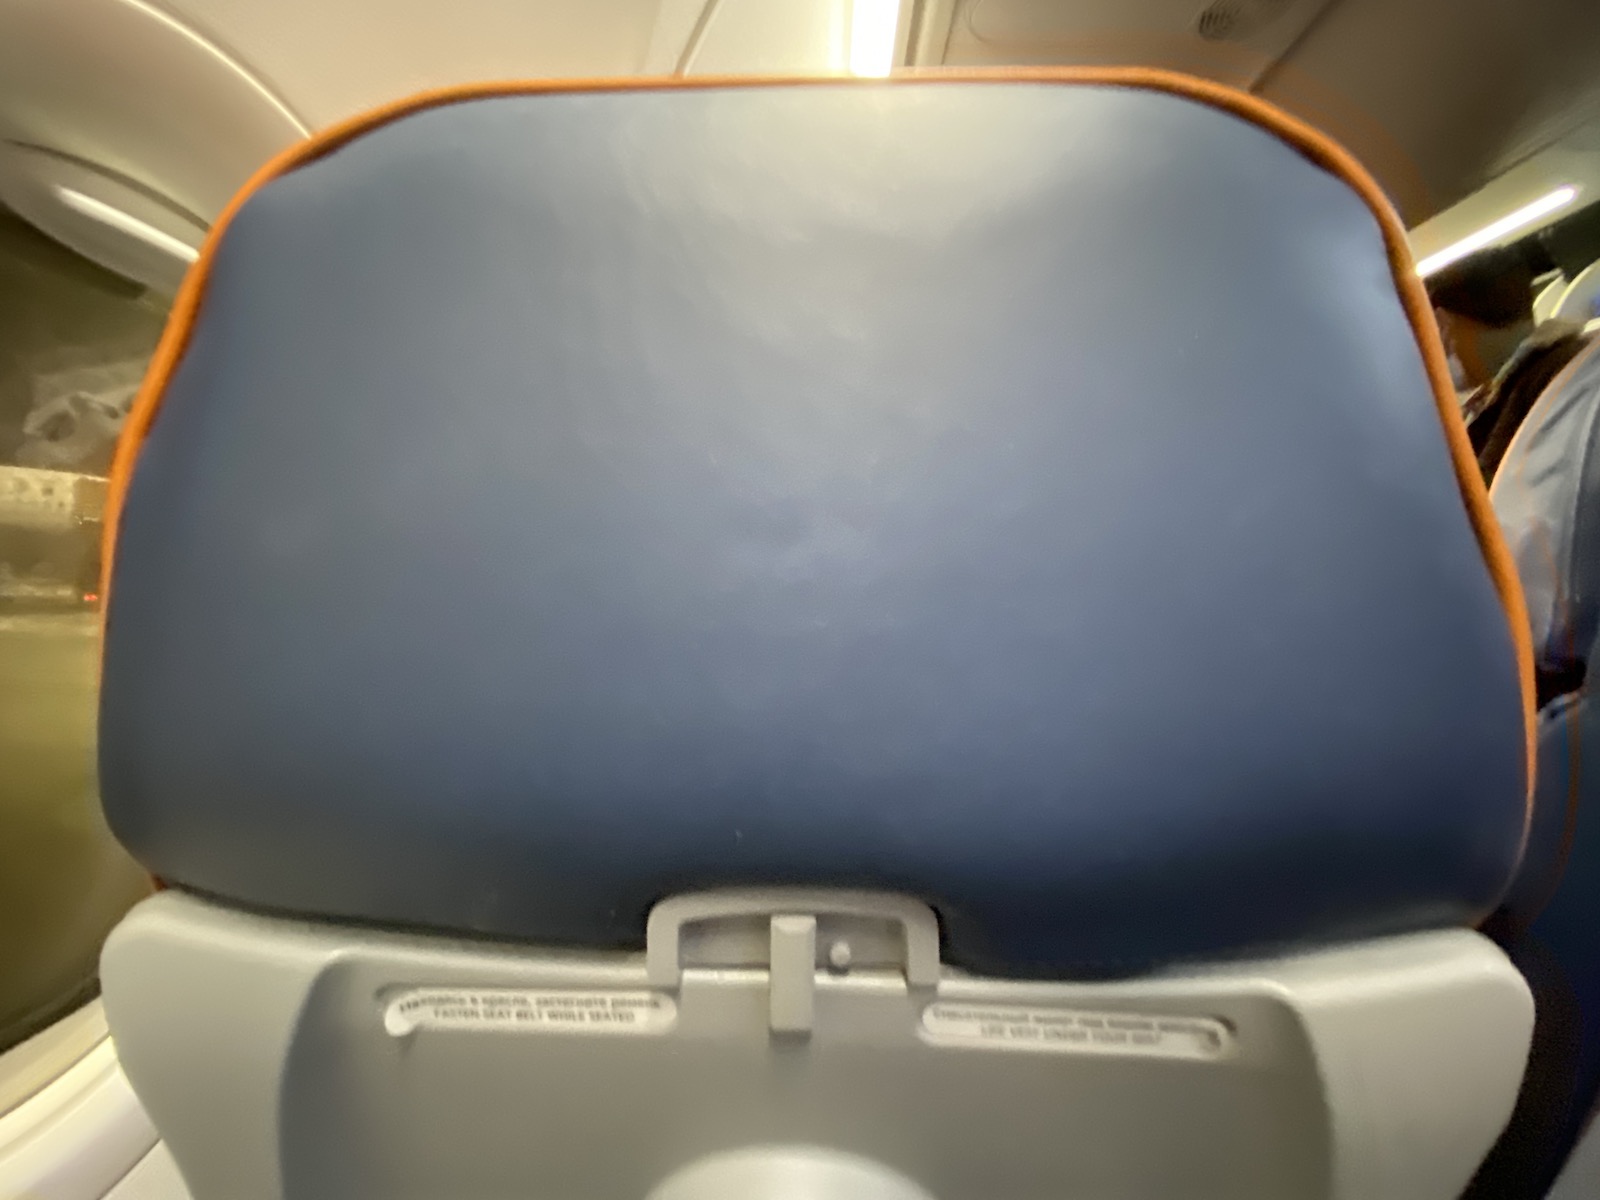 Image of seat back with no entertainment system Aeroflot economy seat